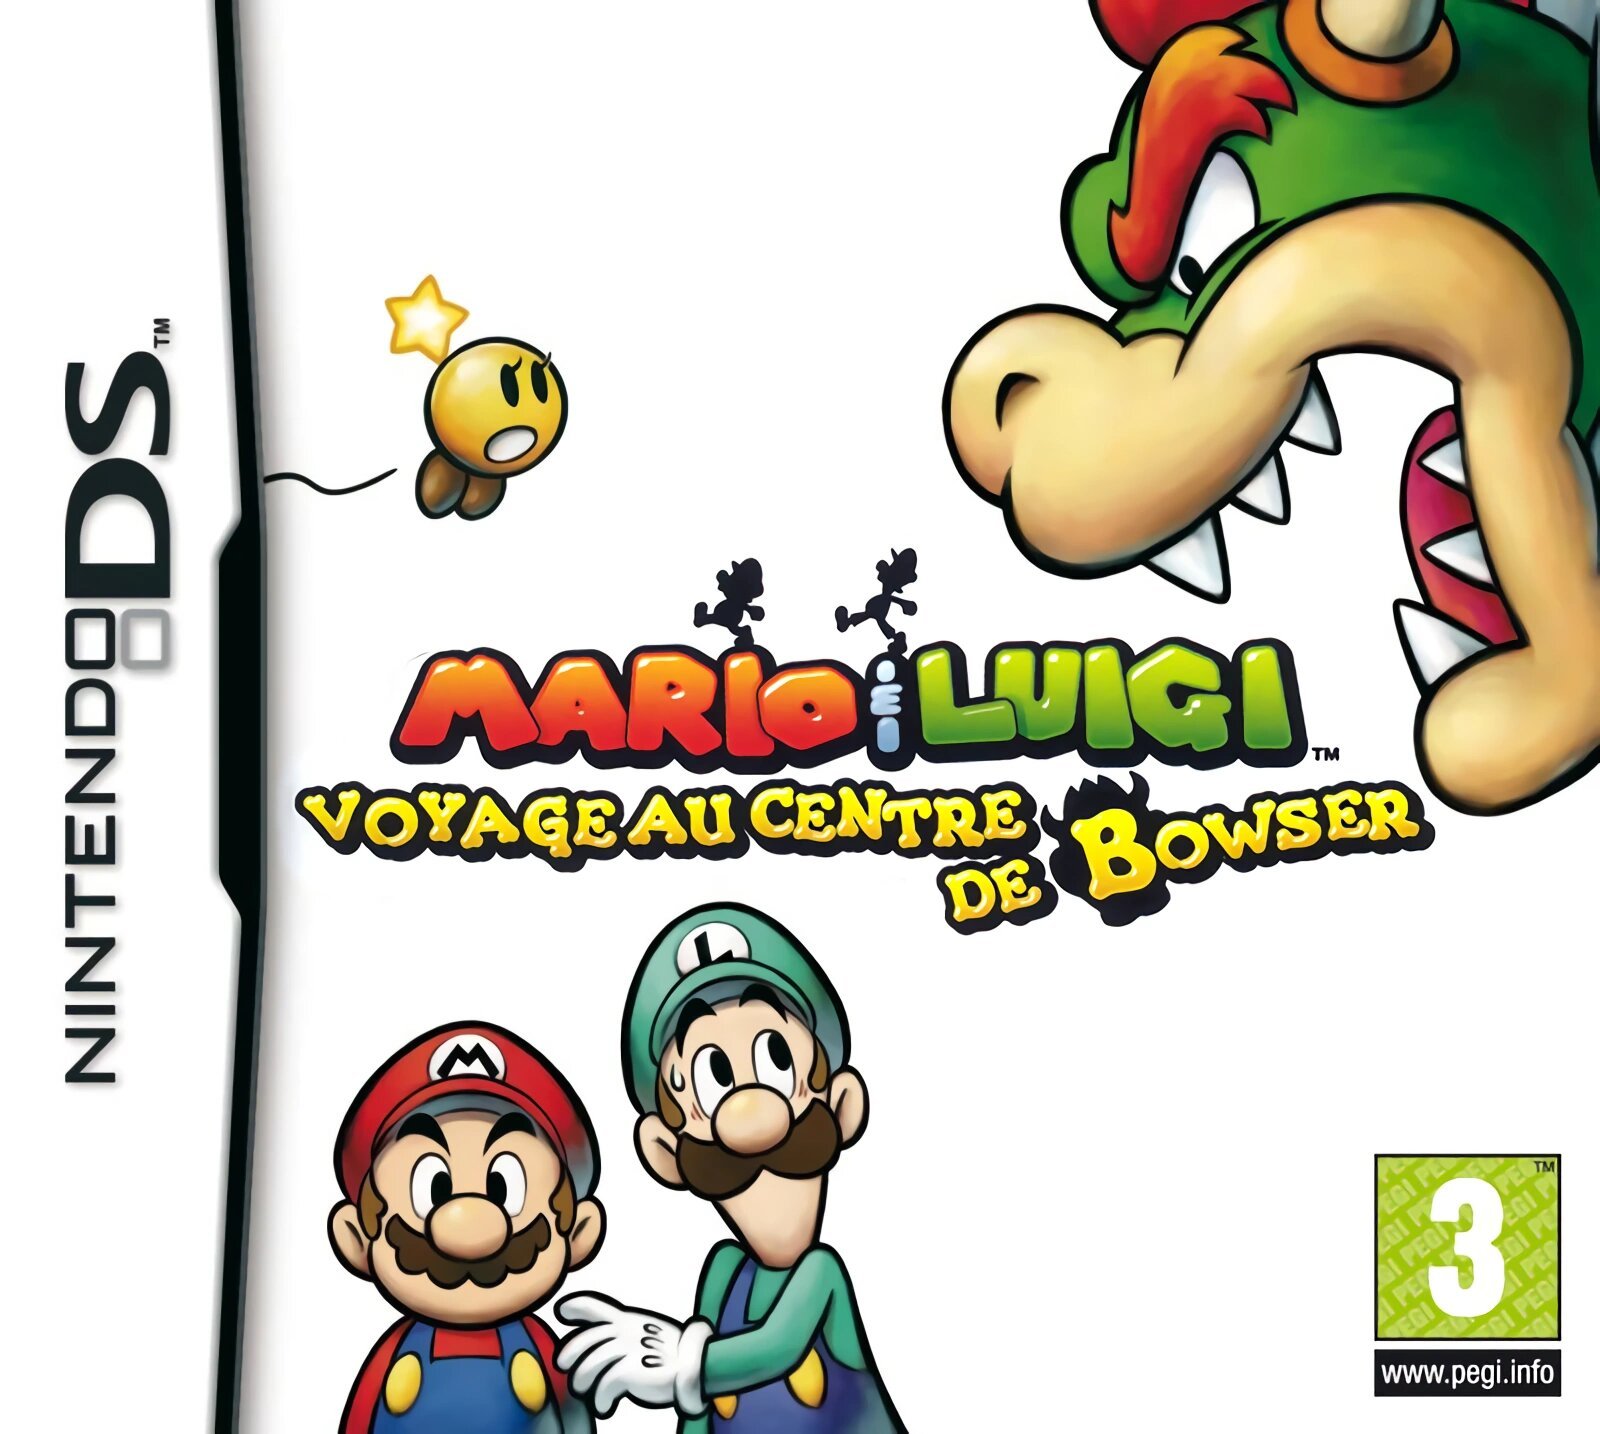 Mario & Luigi : Voyage au centre de Bowser (Kiosk Demo)